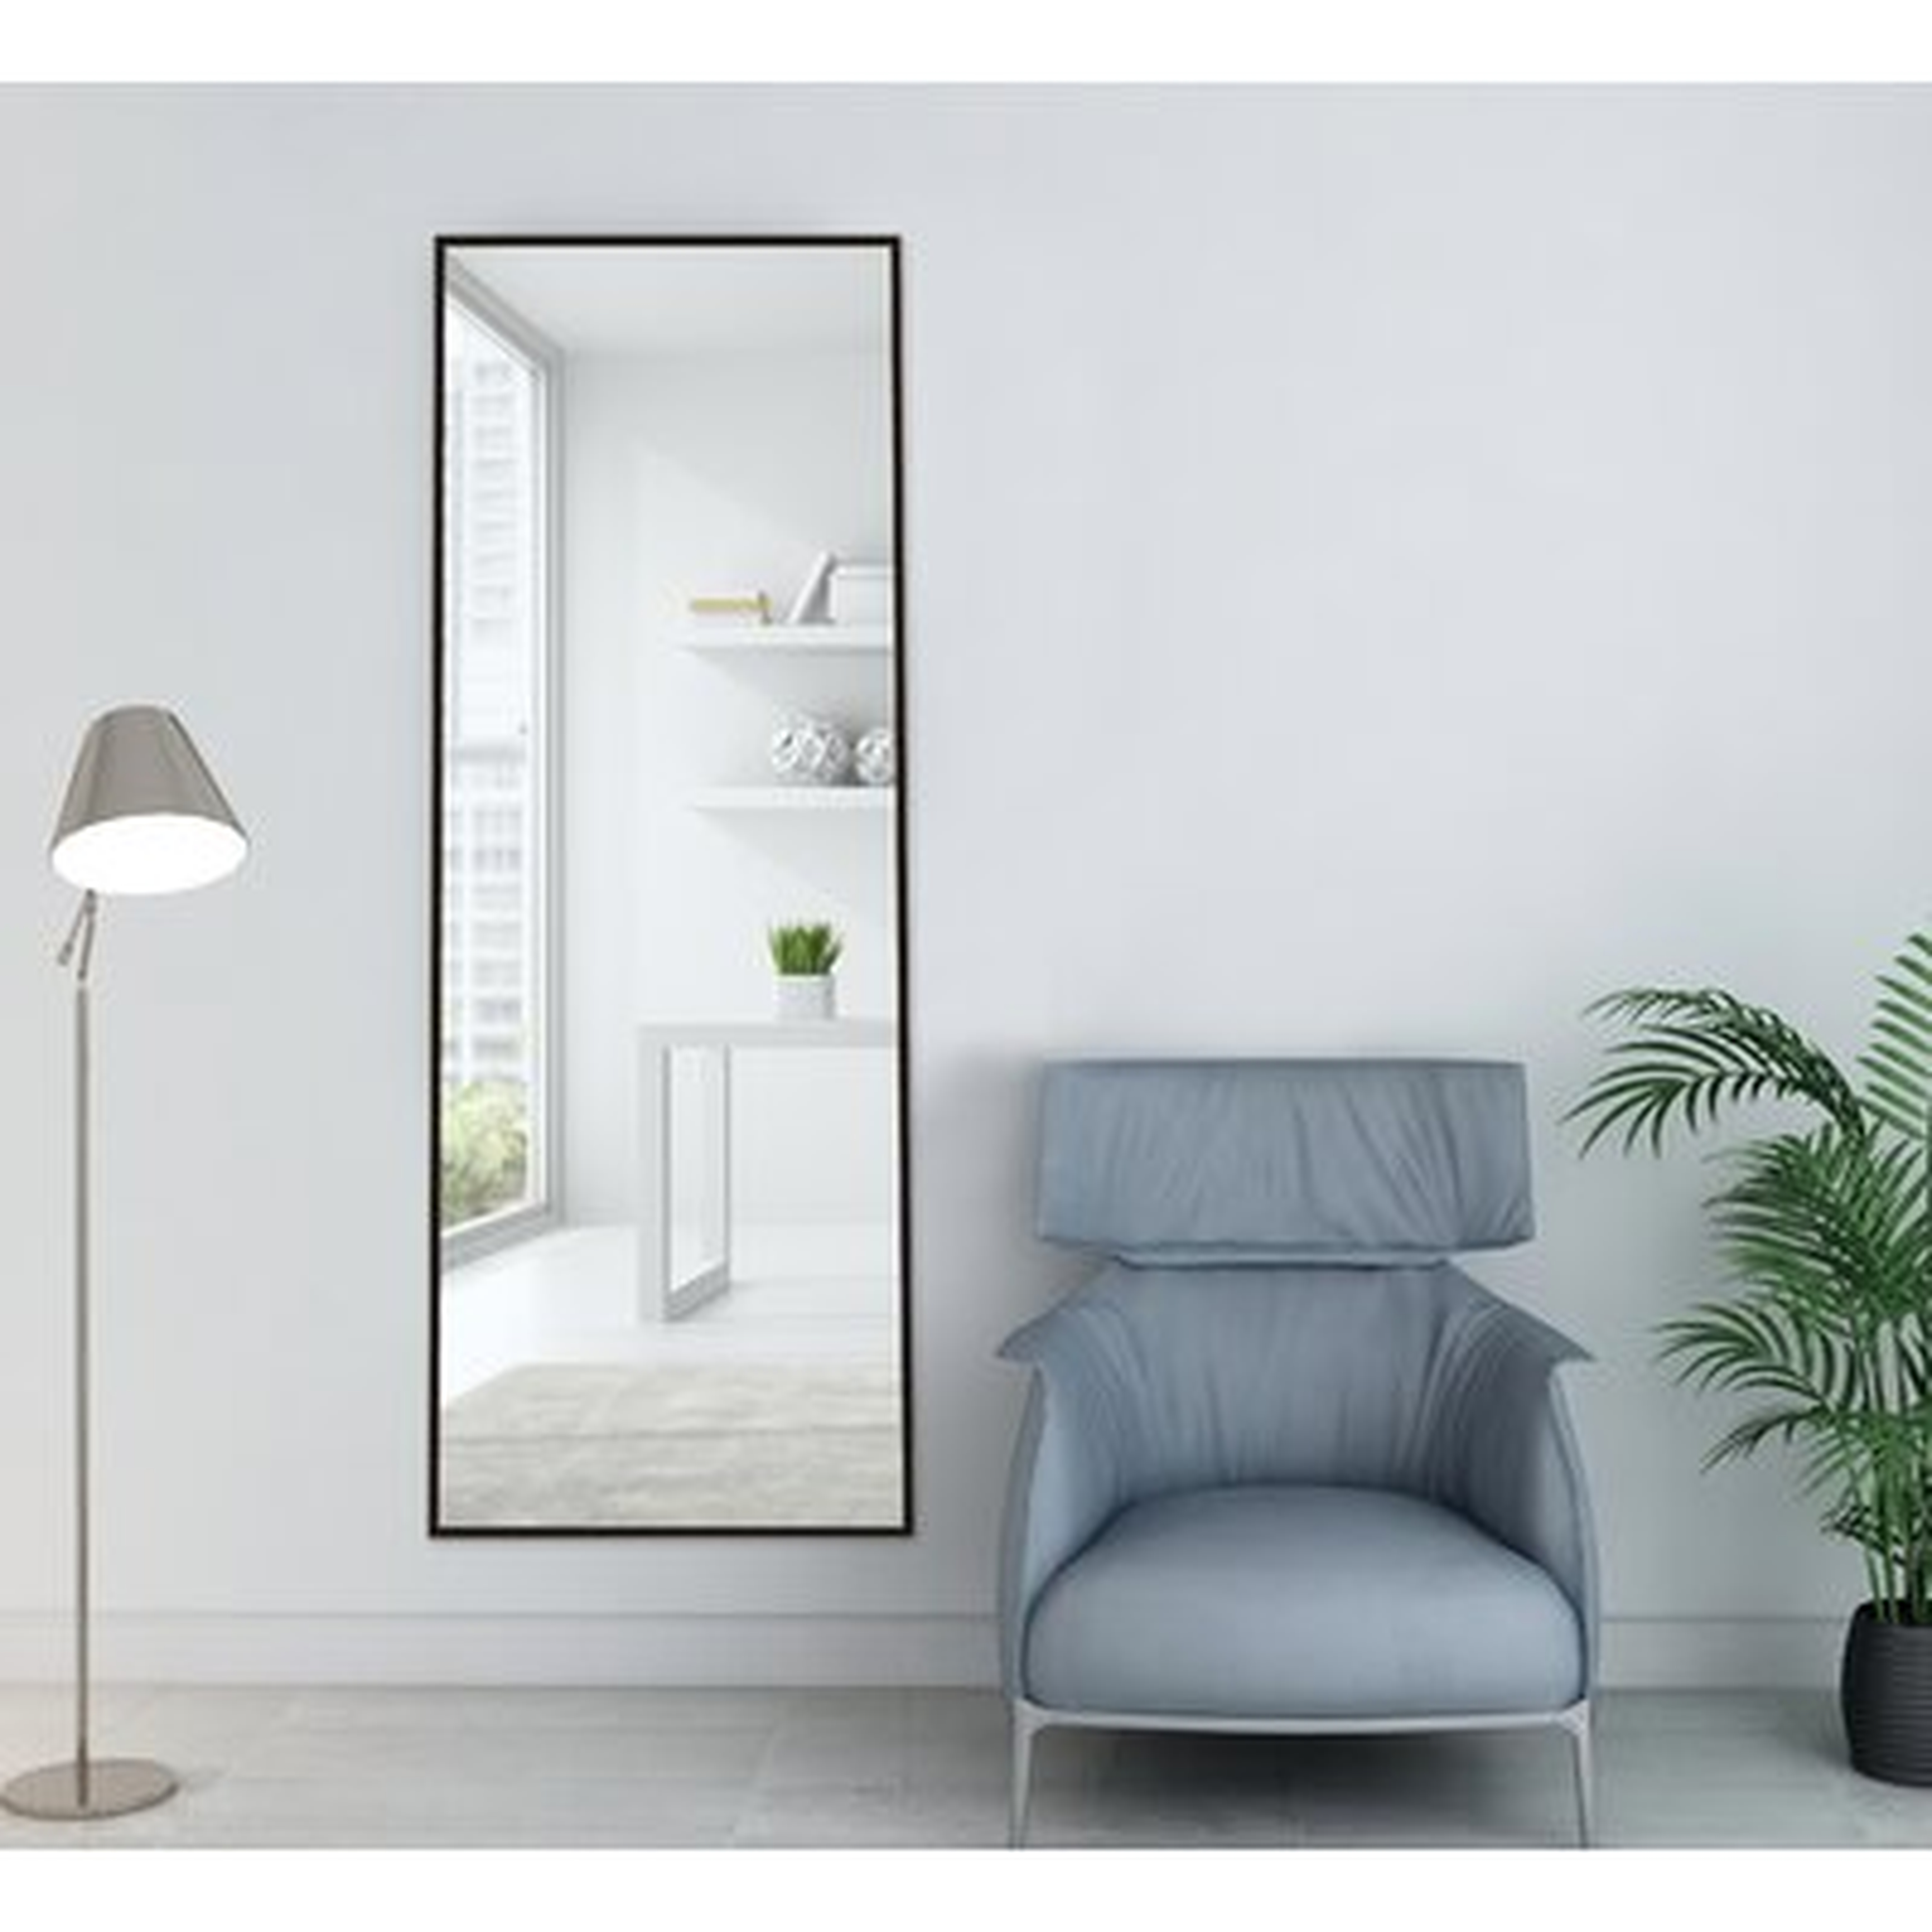 Stent Full-length Mirror And Pendant Mirror - Wayfair